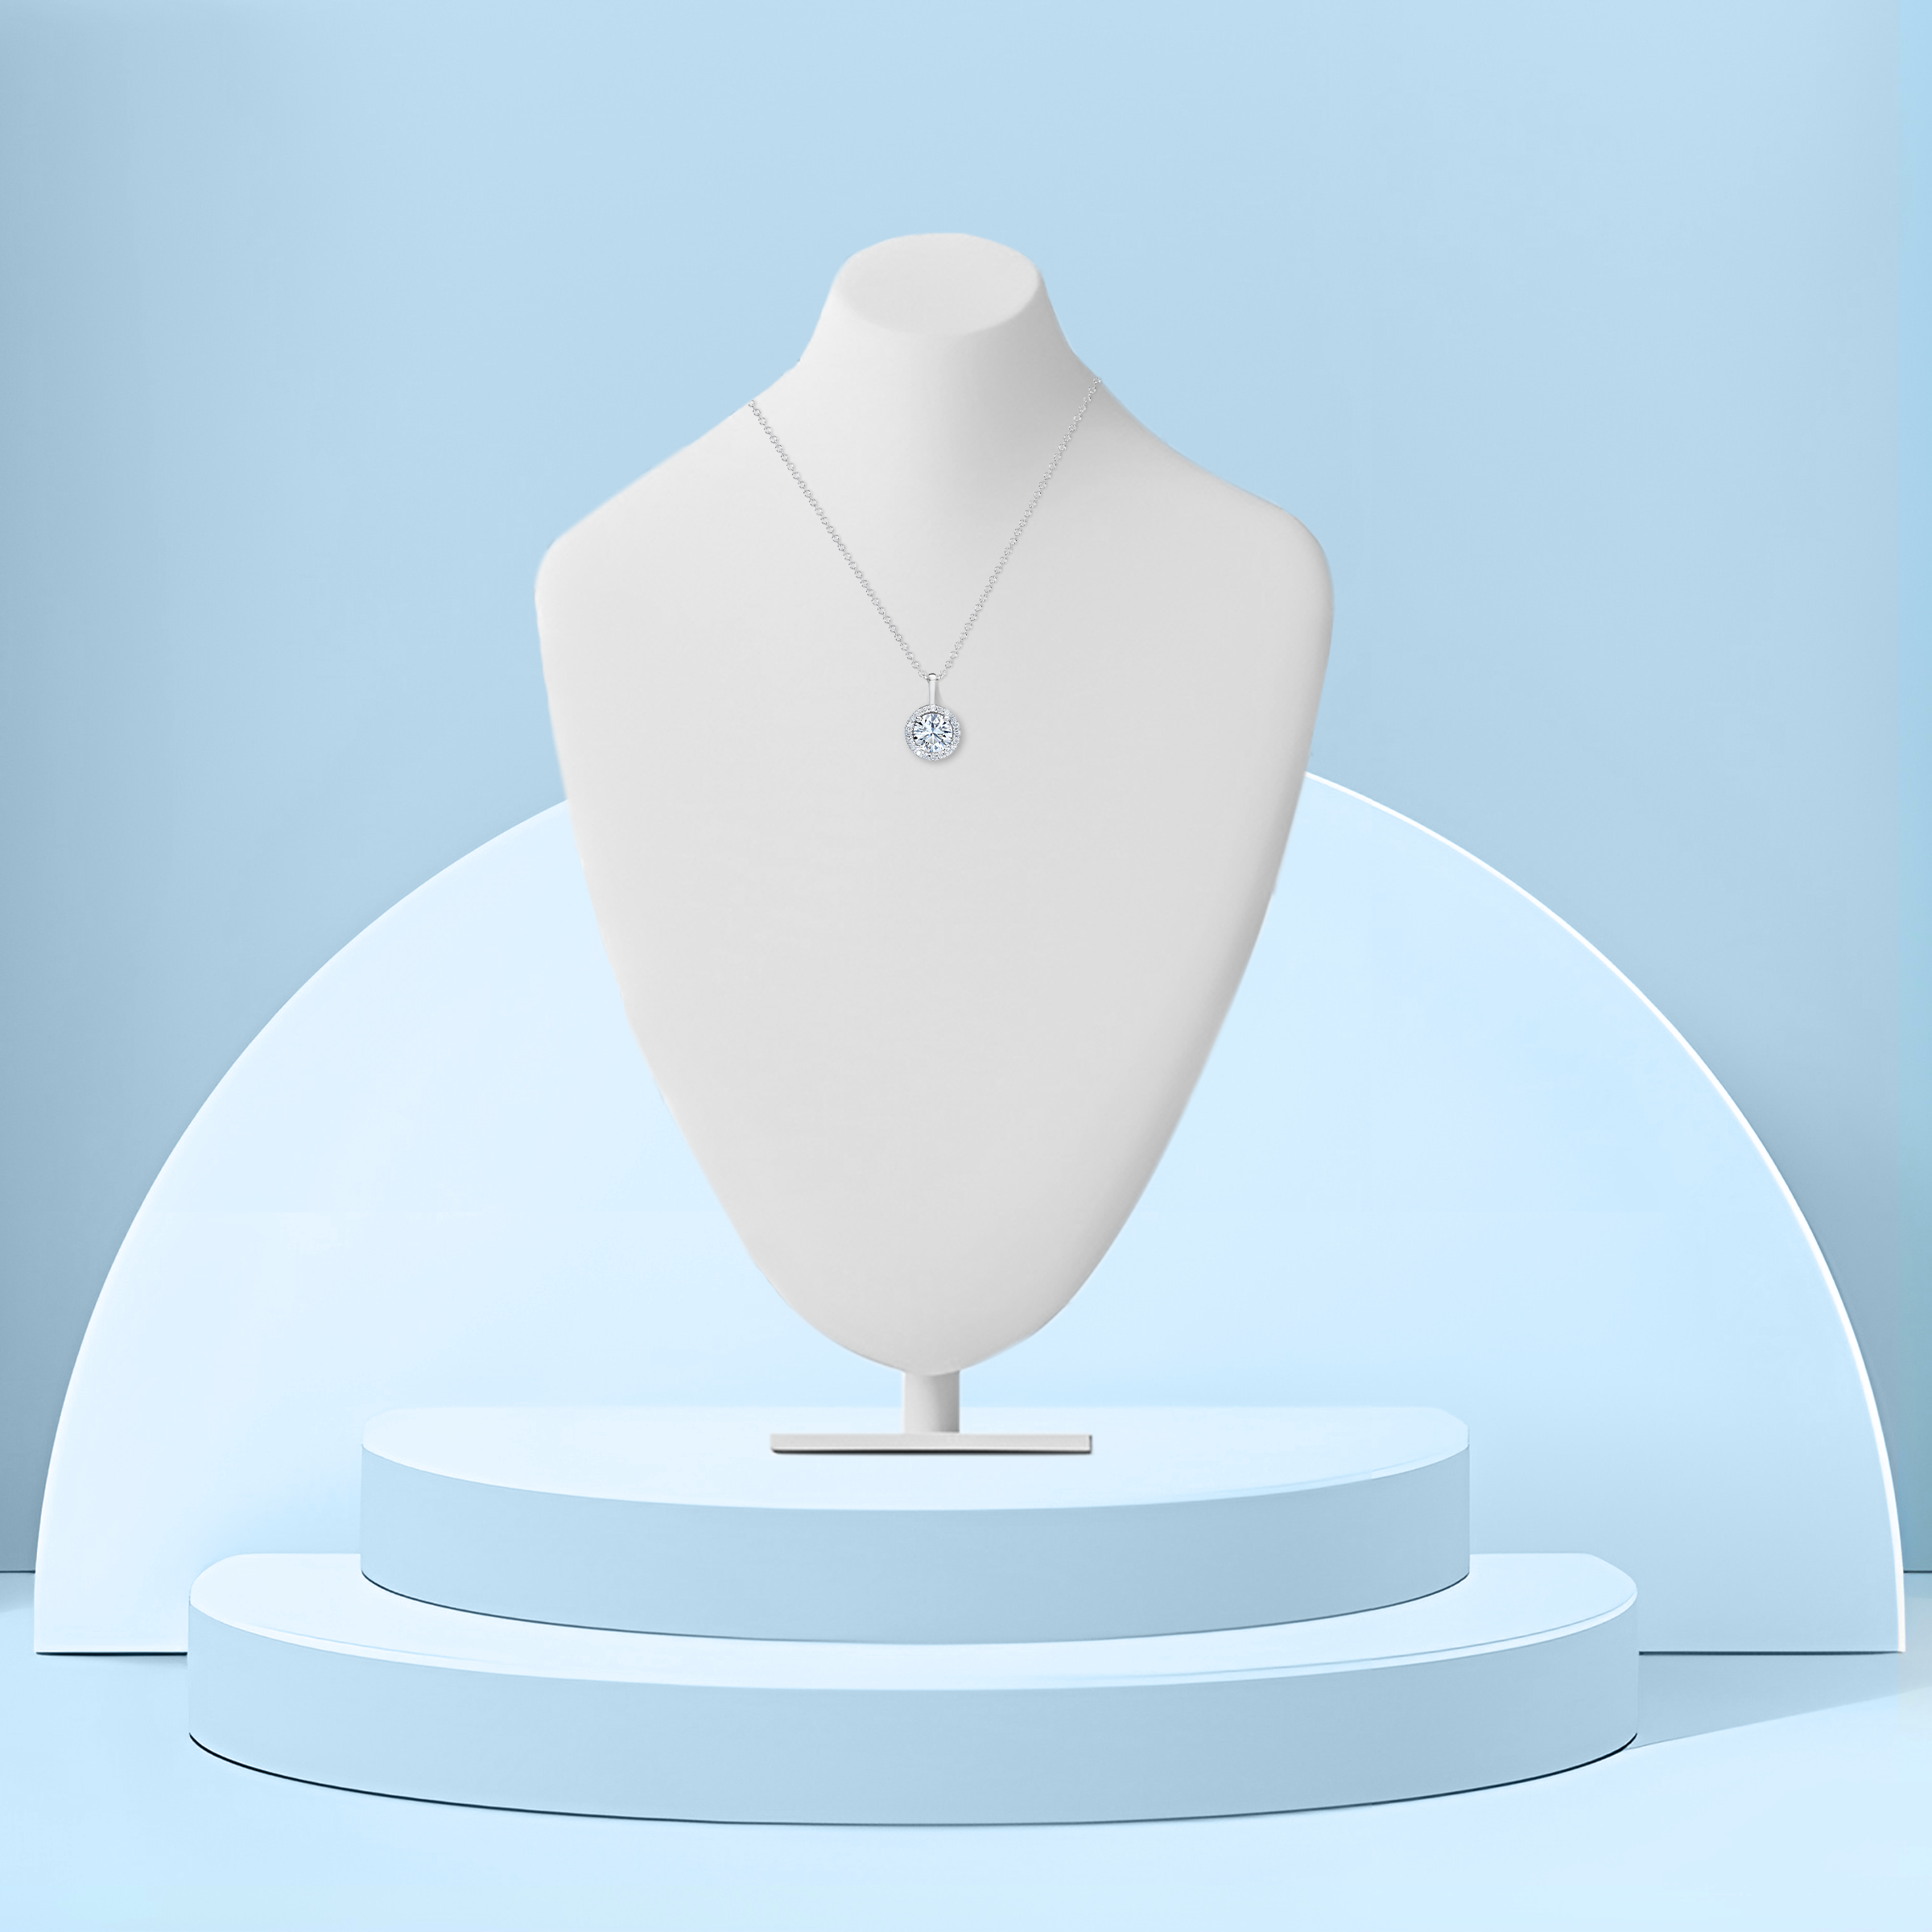 Round Brilliant Diamond Halo Pendent Necklace in 18k White Gold